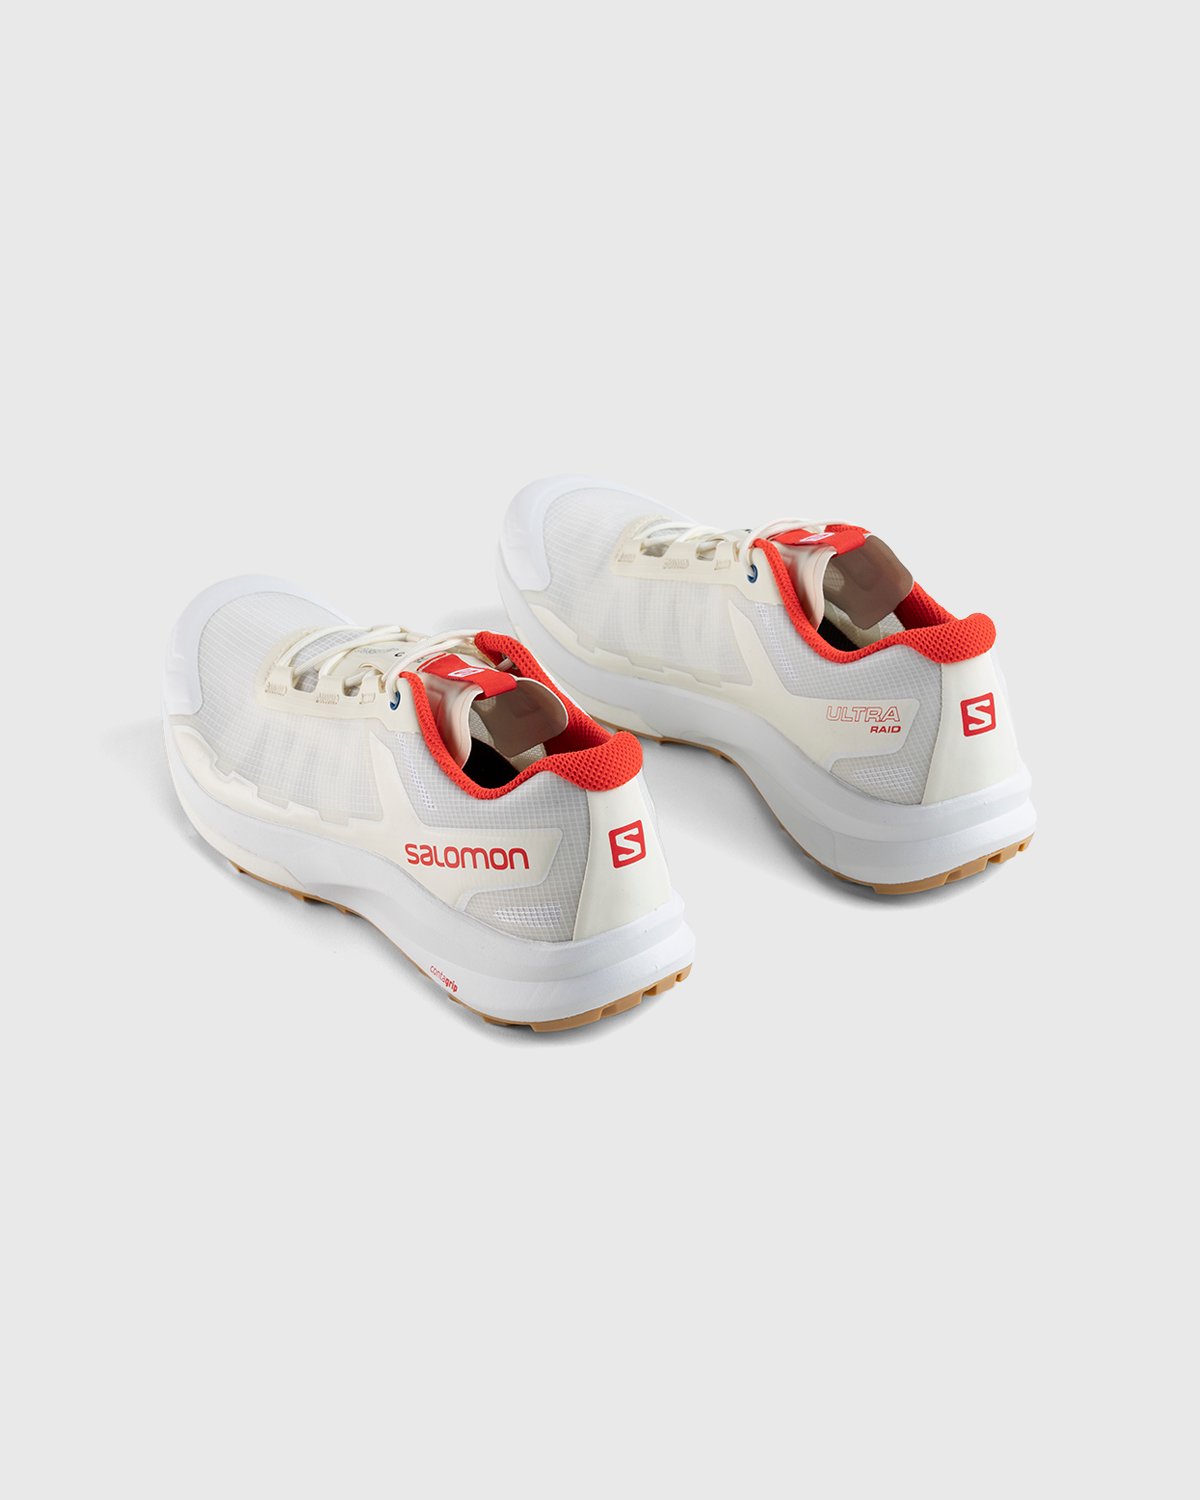 Copson x Salomon - Ultra Raid White/Red - Footwear - White - Image 4